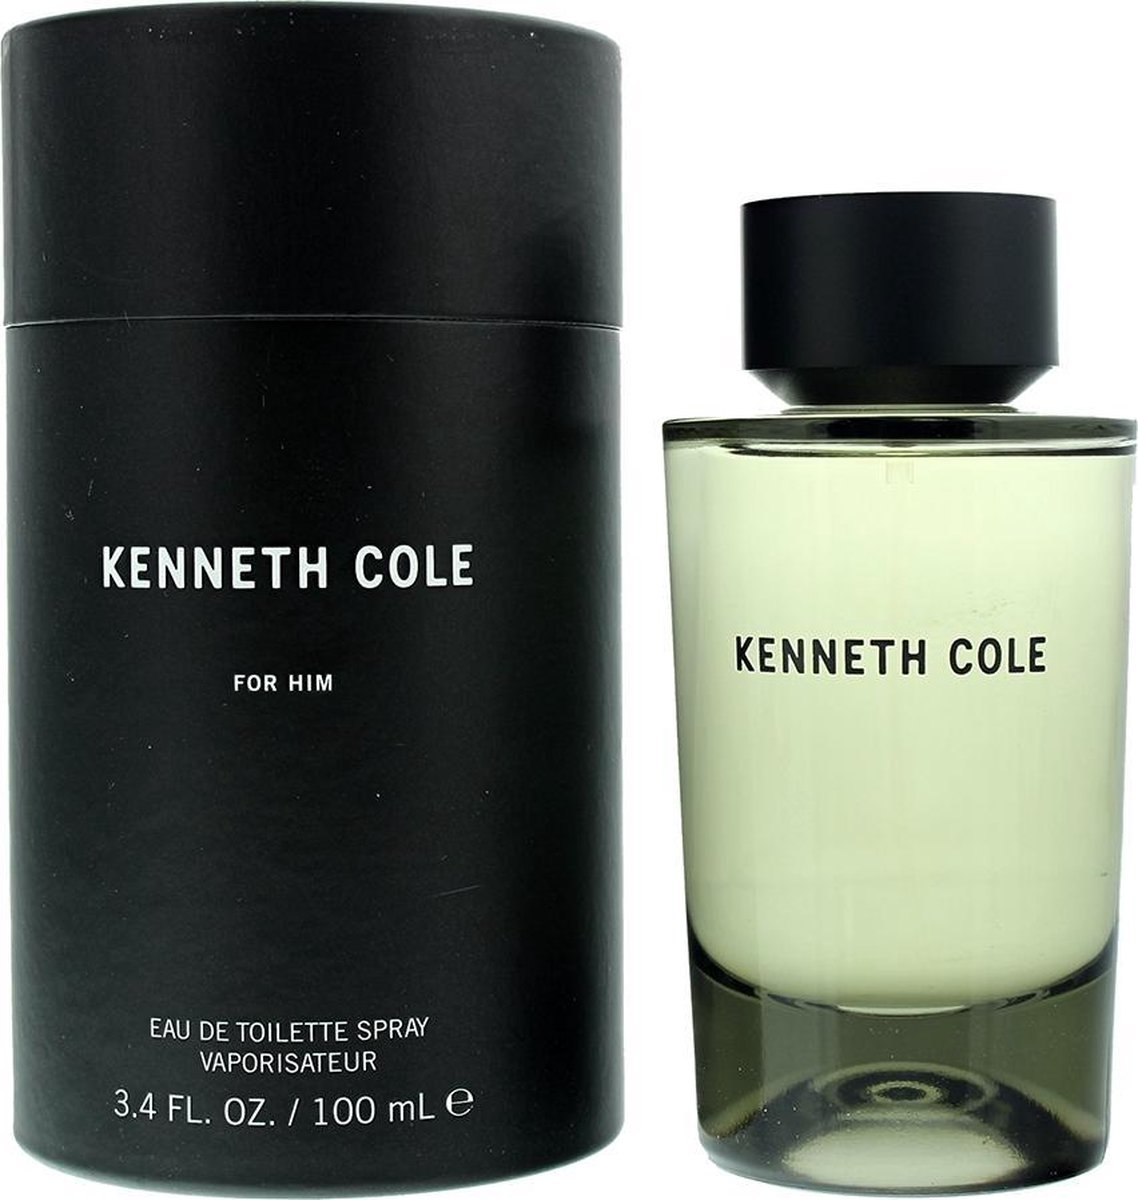 Kenneth Cole for Him by Kenneth Cole 100 ml - Eau De Toilette Spray